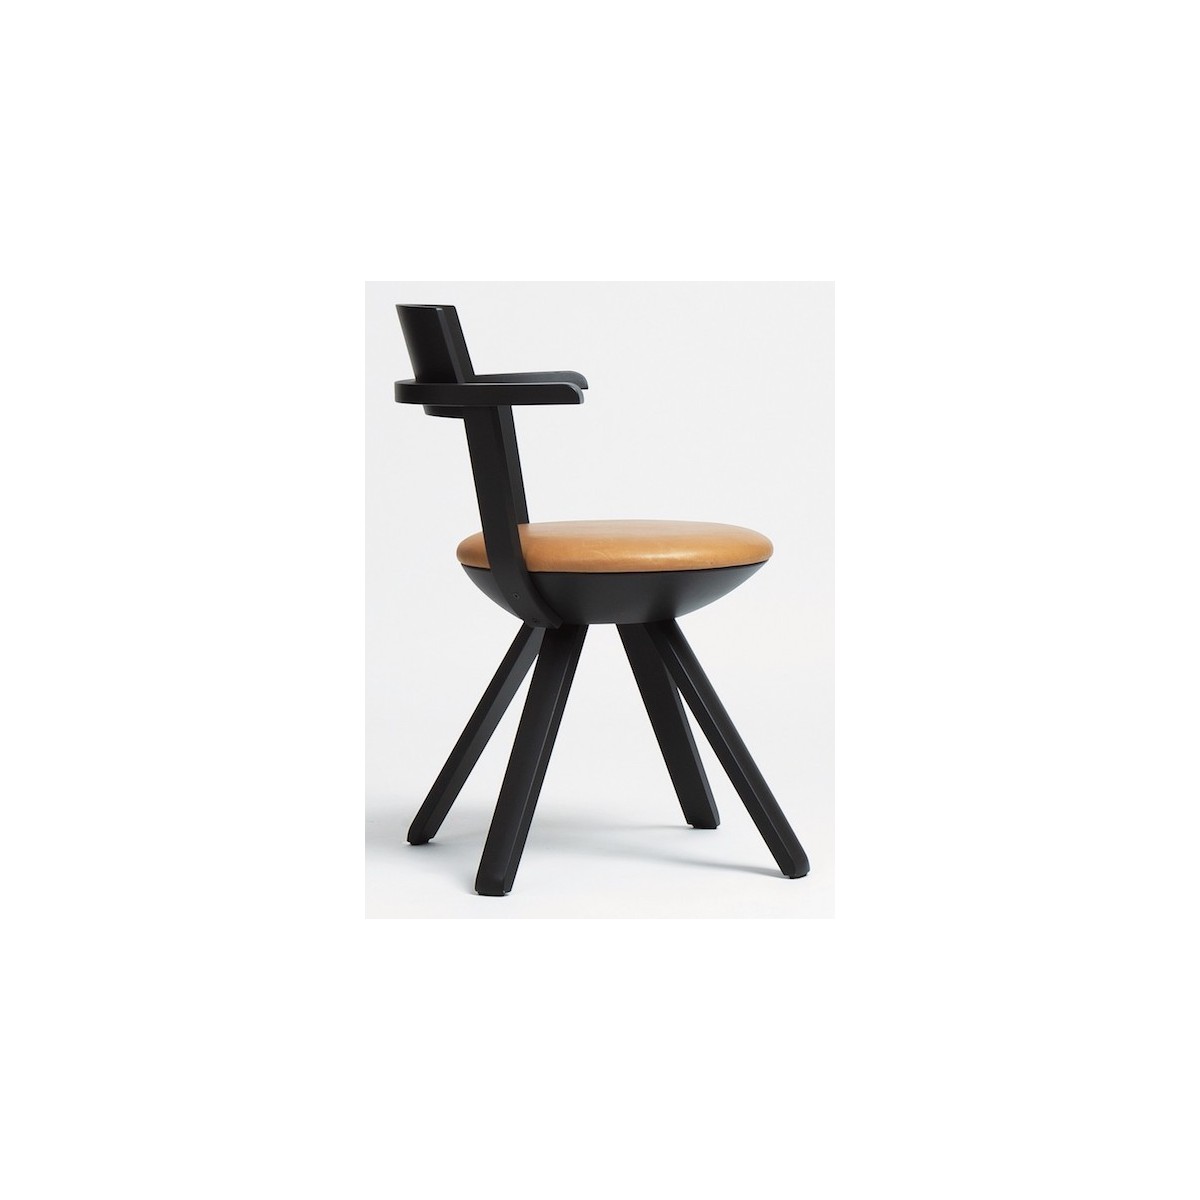 KG002 - caramel leather + asphalt - Rival chair